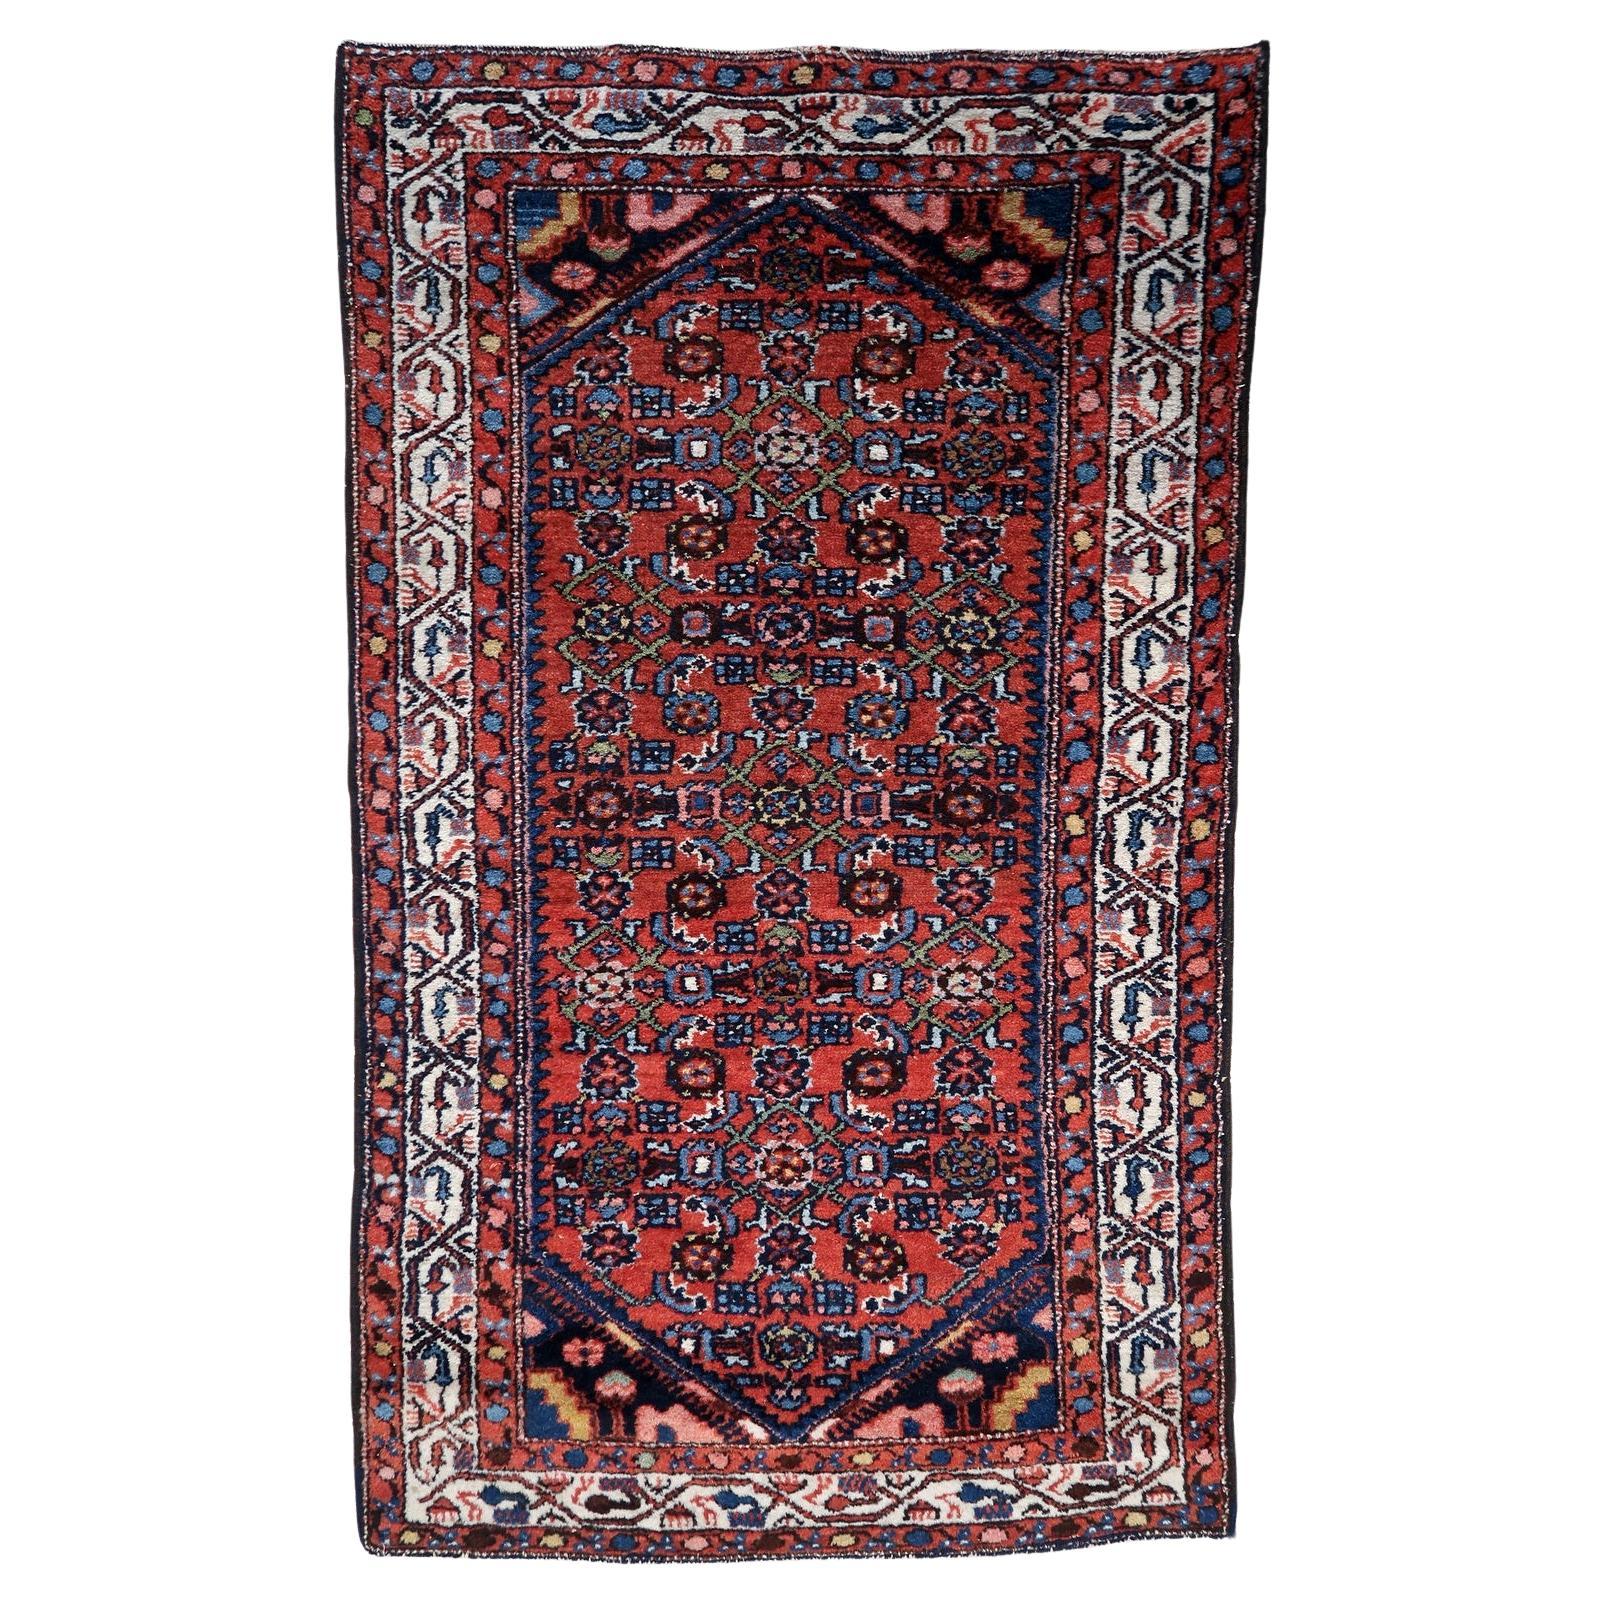 Handmade Vintage Persian Style Hamadan Rug 2.4' x 4.1', 1970s - 1C1122 For Sale